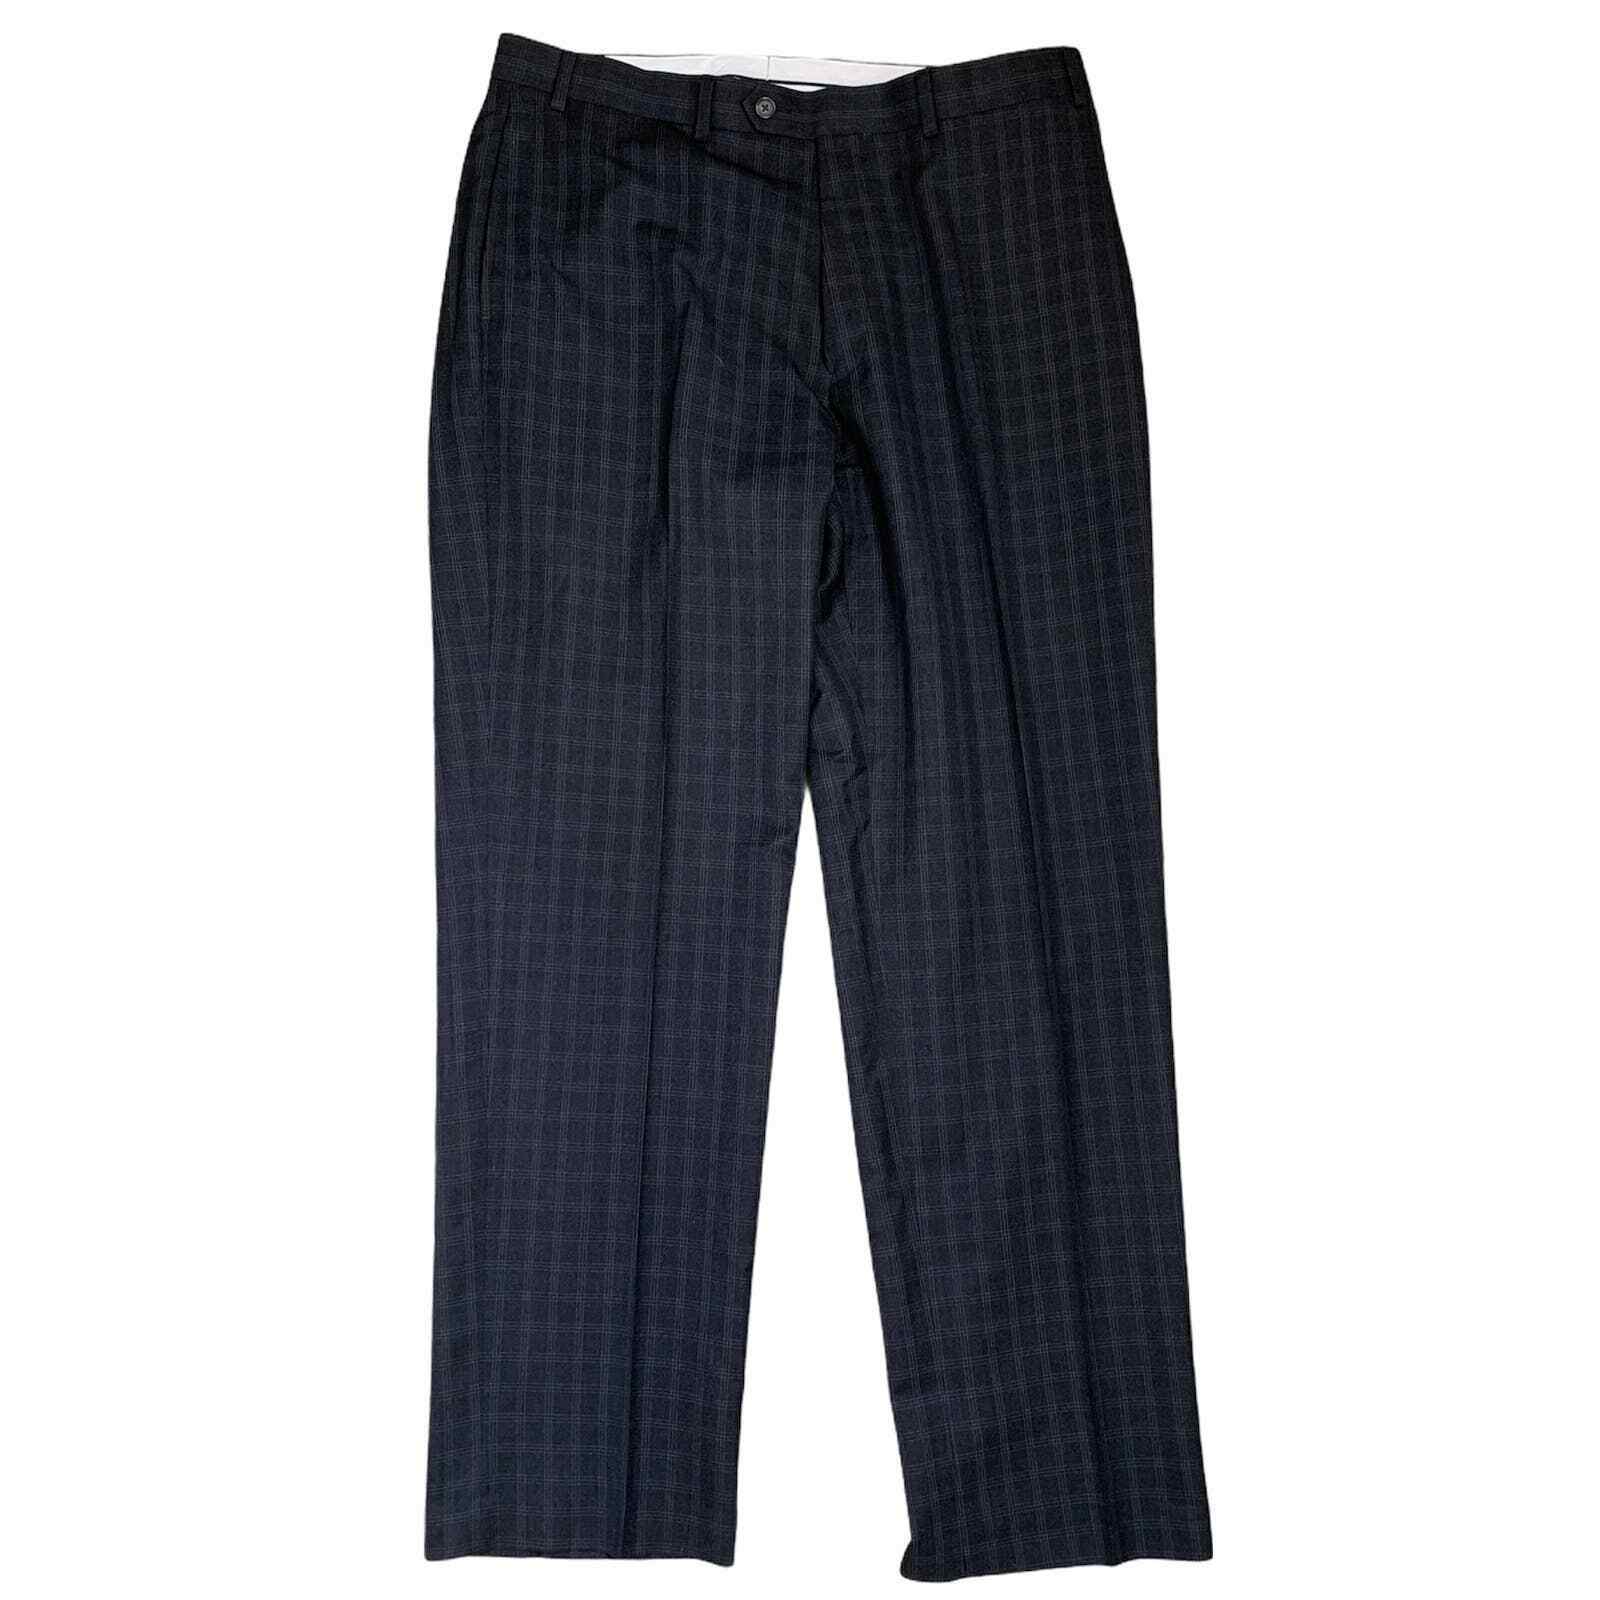 Primary image for Lauren Ralph Lauren Dress Pants Size 36X32 Charcoal Check Flat Front Mens